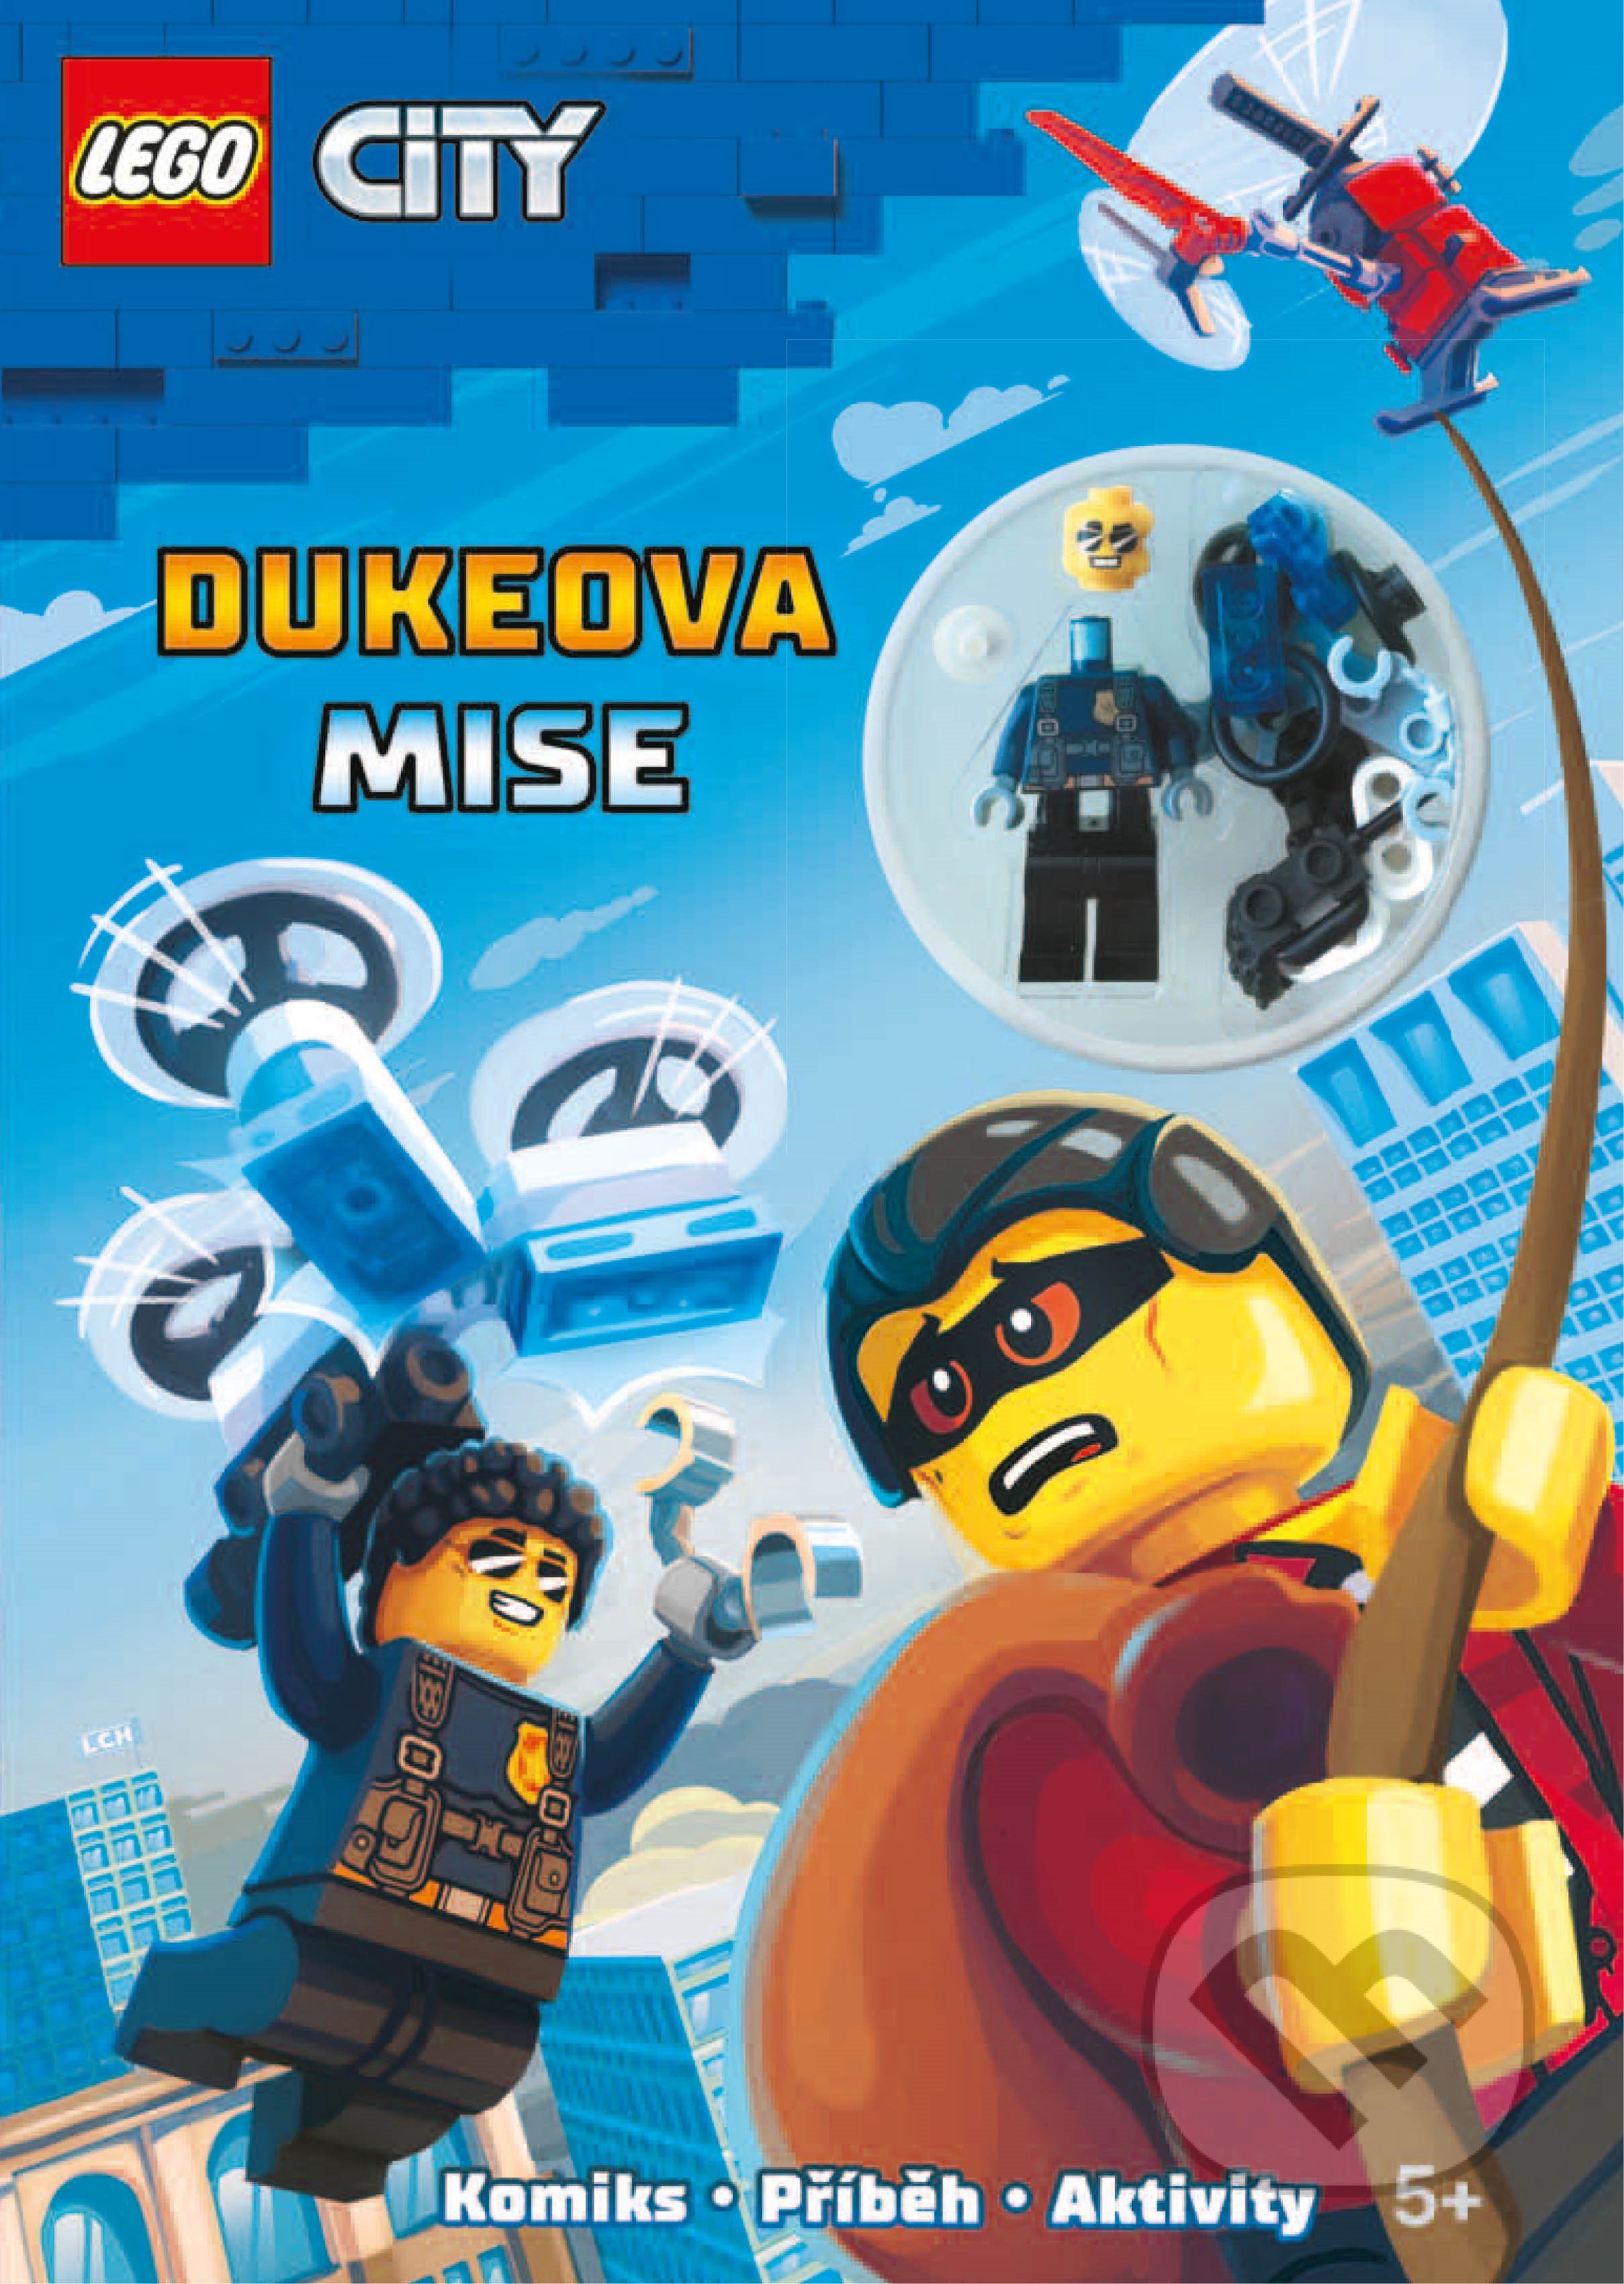 LEGO CITY: Dukeova mise, CPRESS, 2020